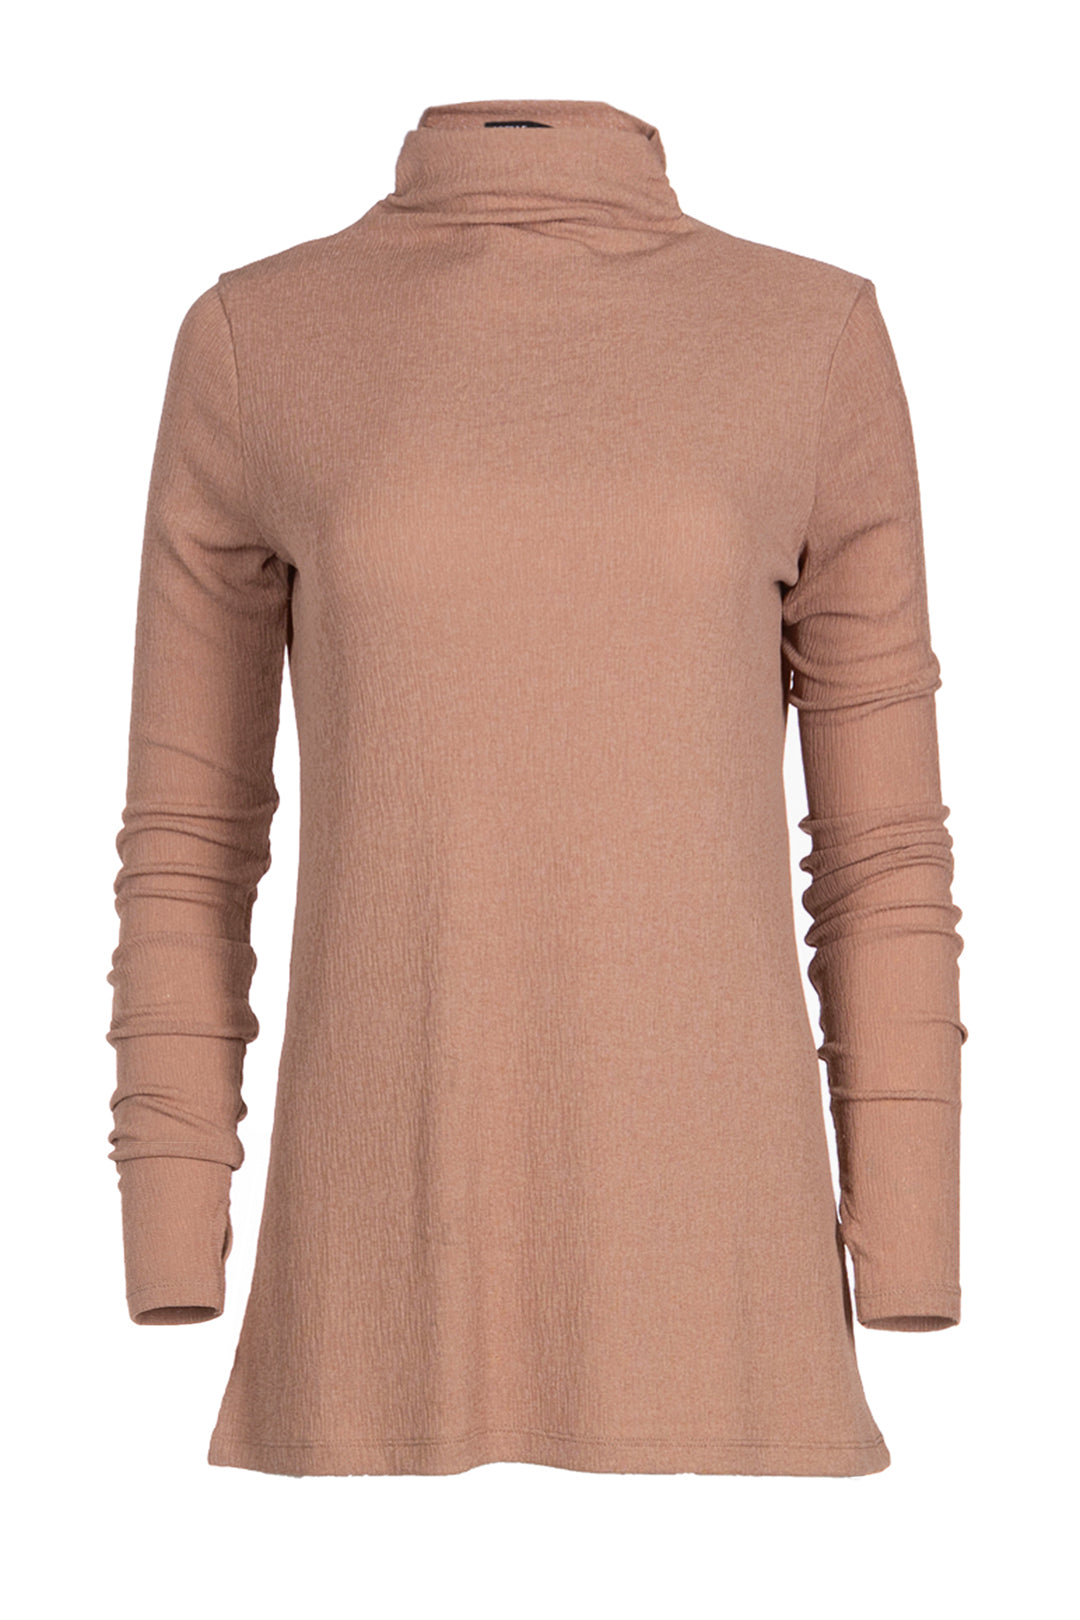 Pale brown turtleneck sweater | Yoda